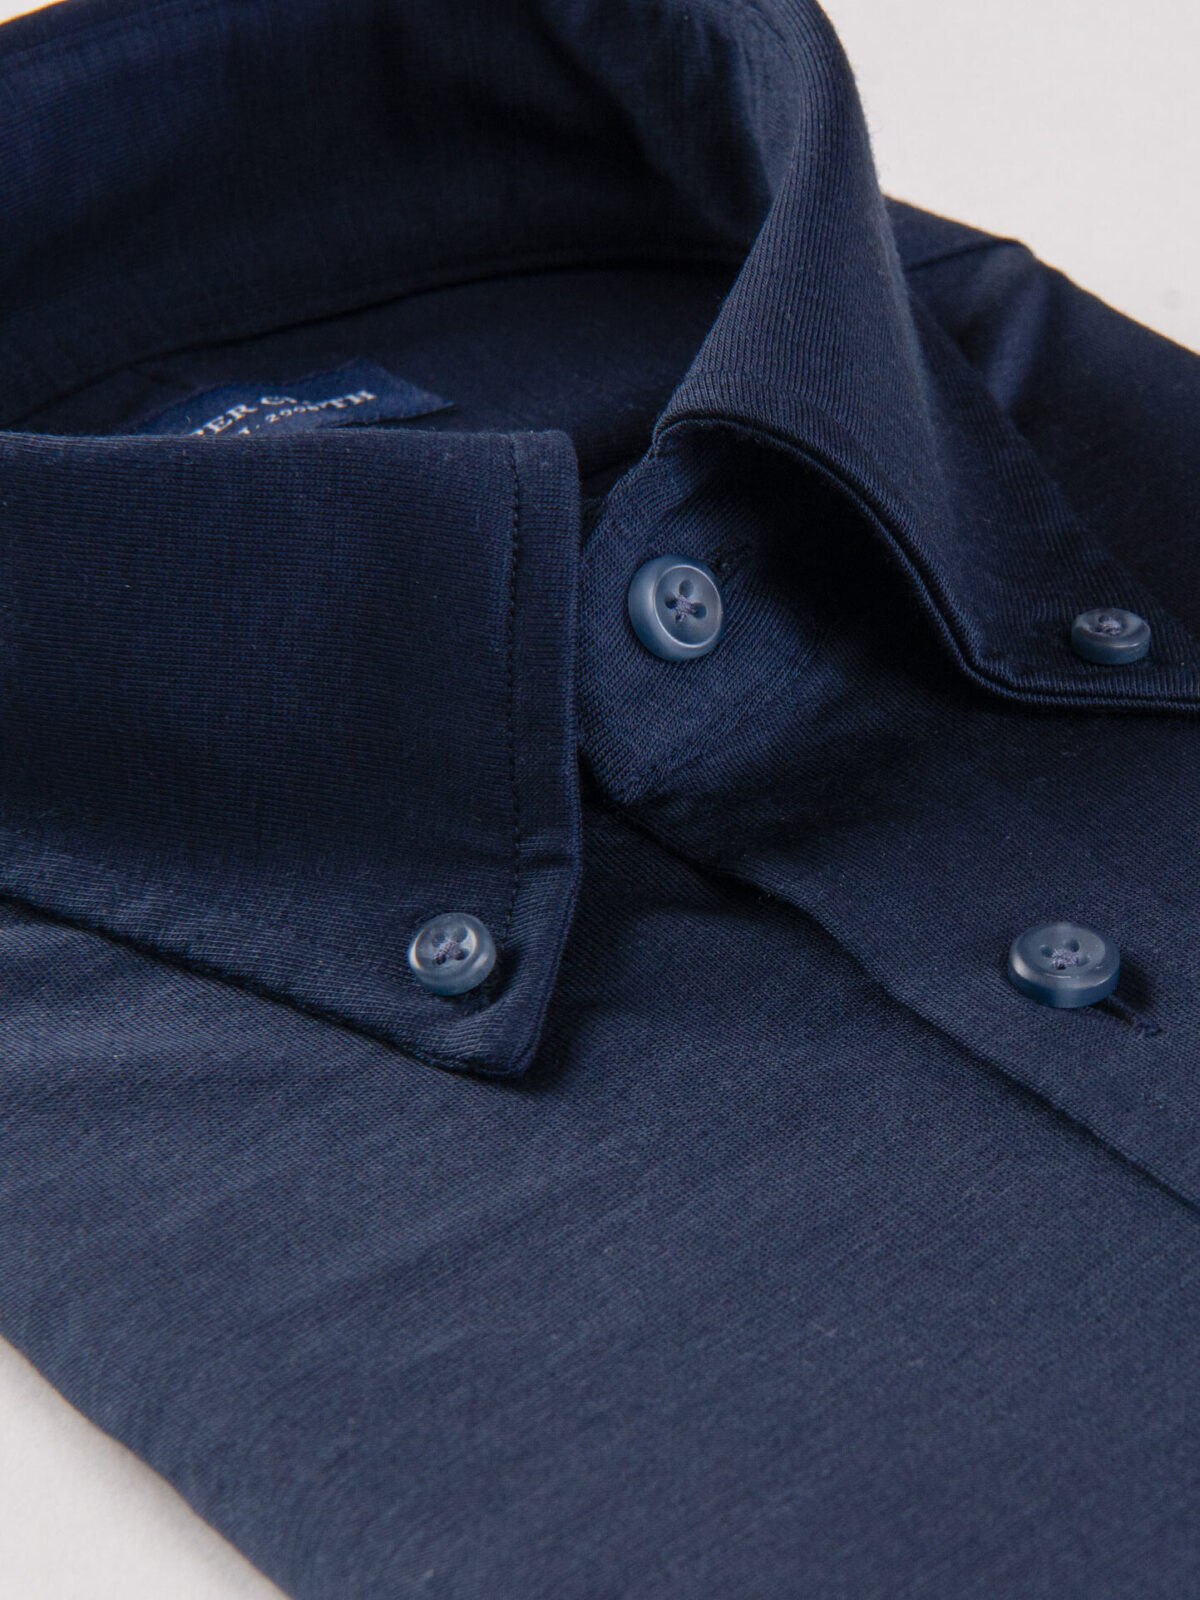 Reda Navy Merino Wool Jersey Knit Shirt by Proper Cloth